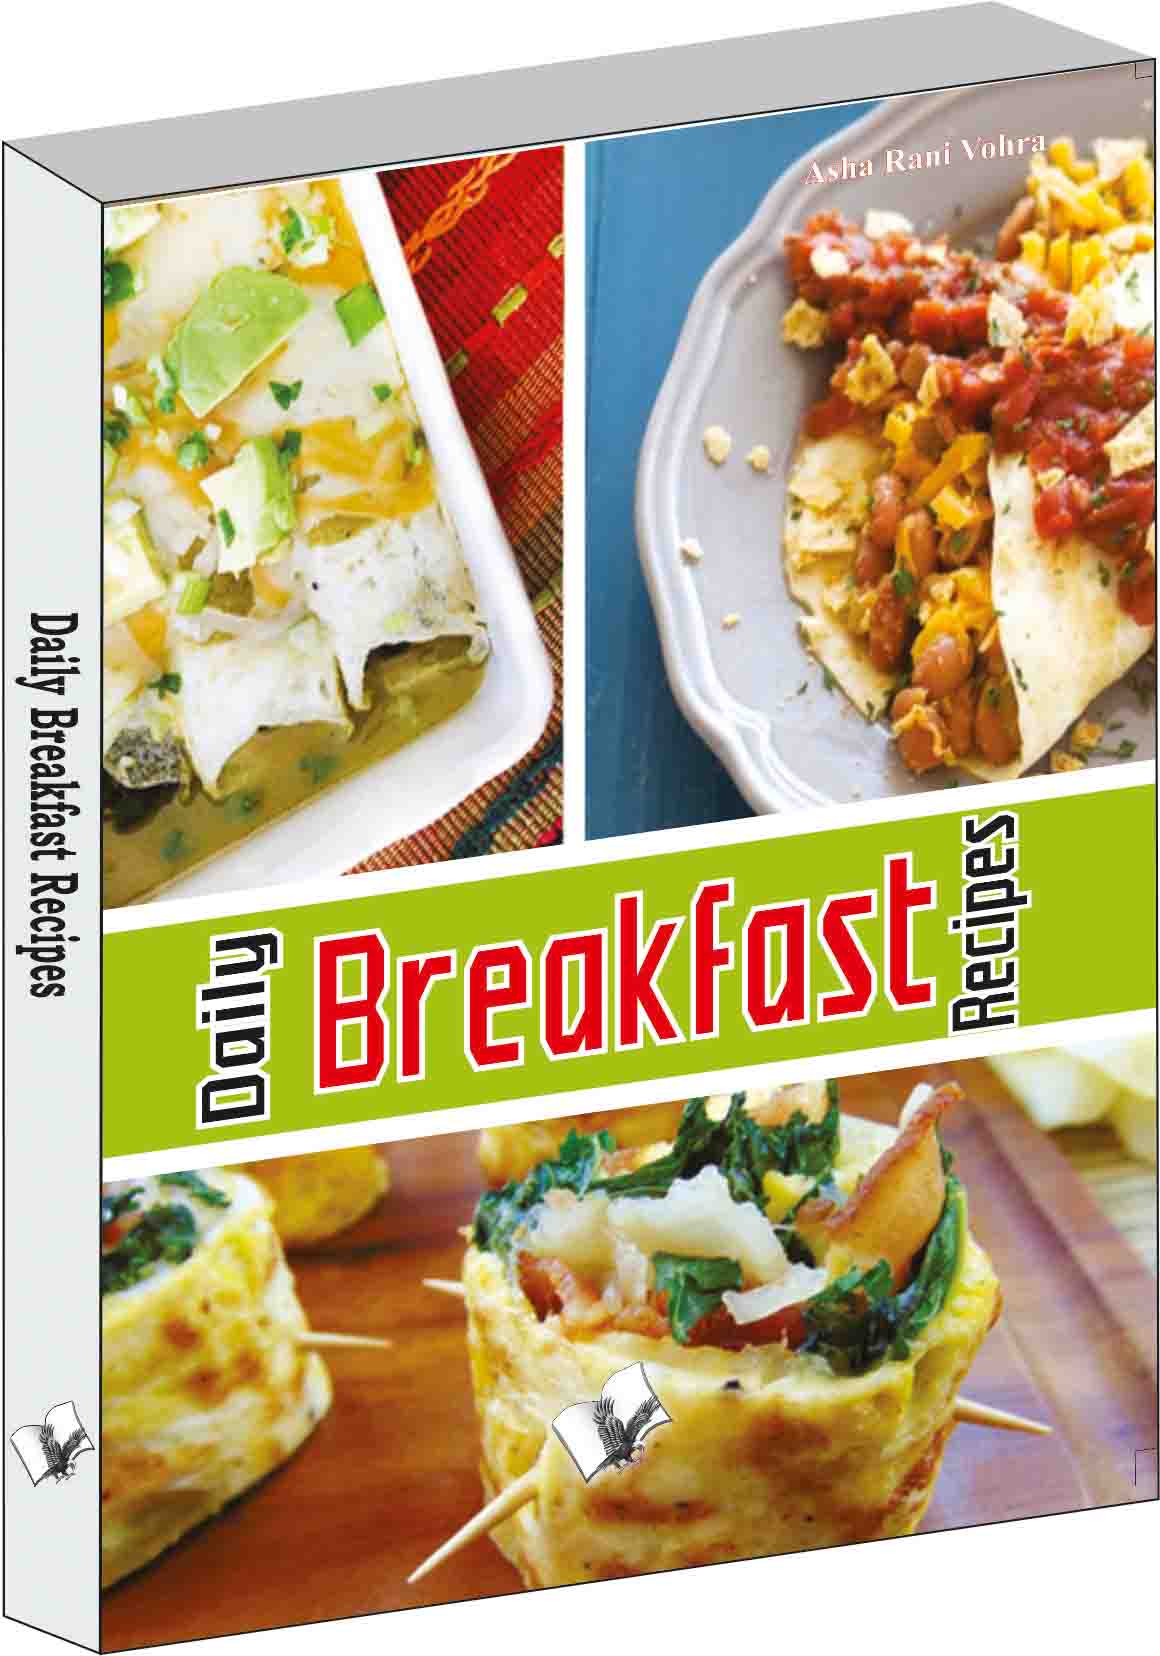 Daily Breakfast Recipes -New breakfast each day